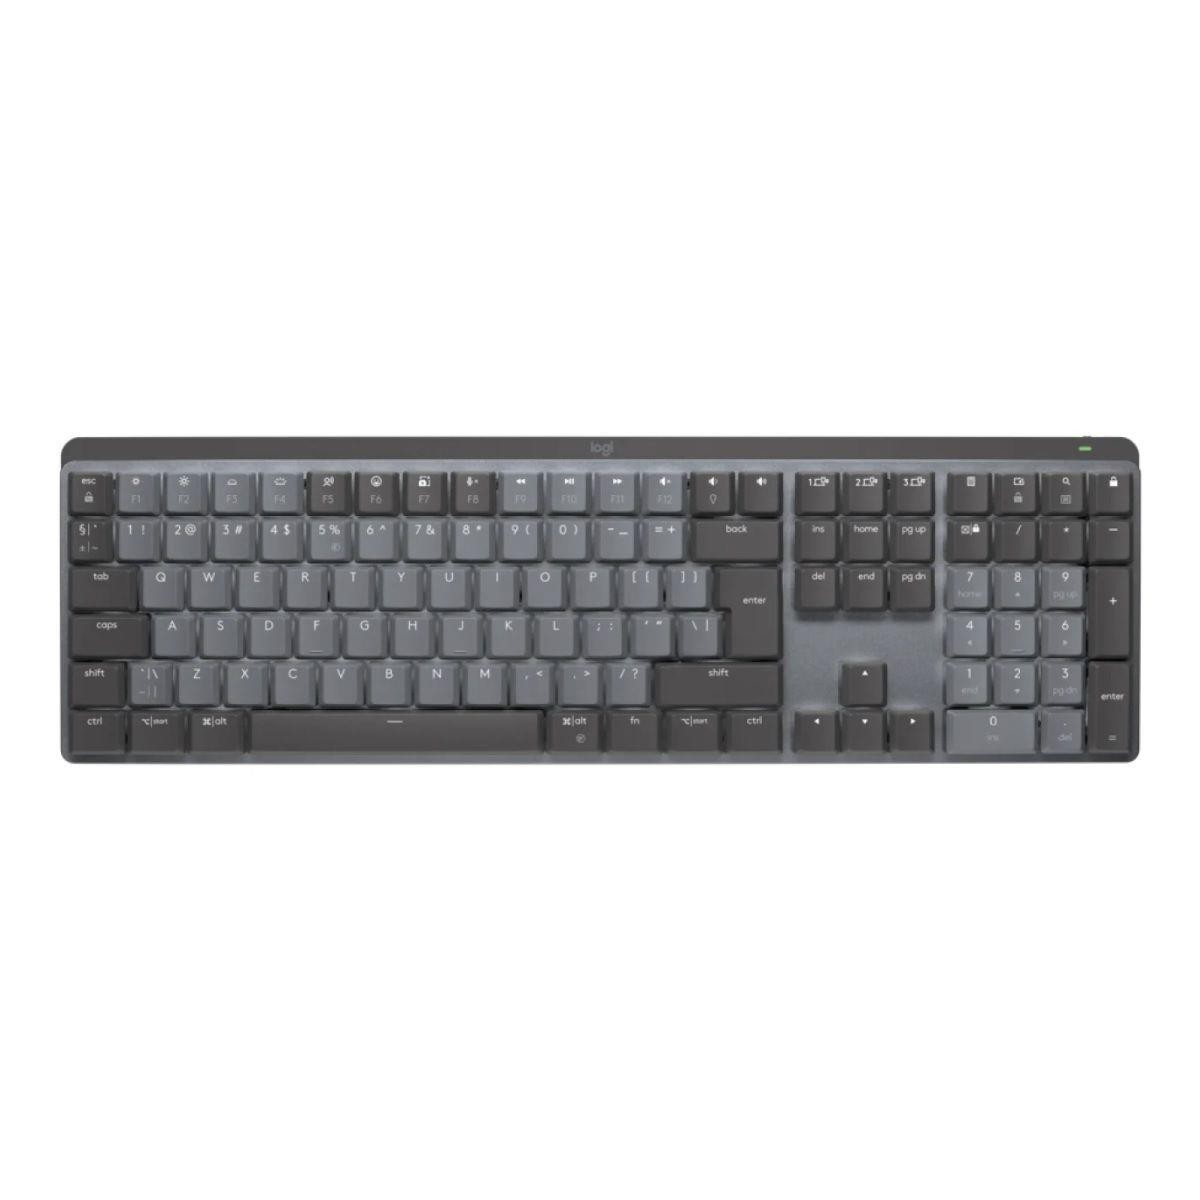 Logitech MX 920-010758 - Keyboard - QWERTY